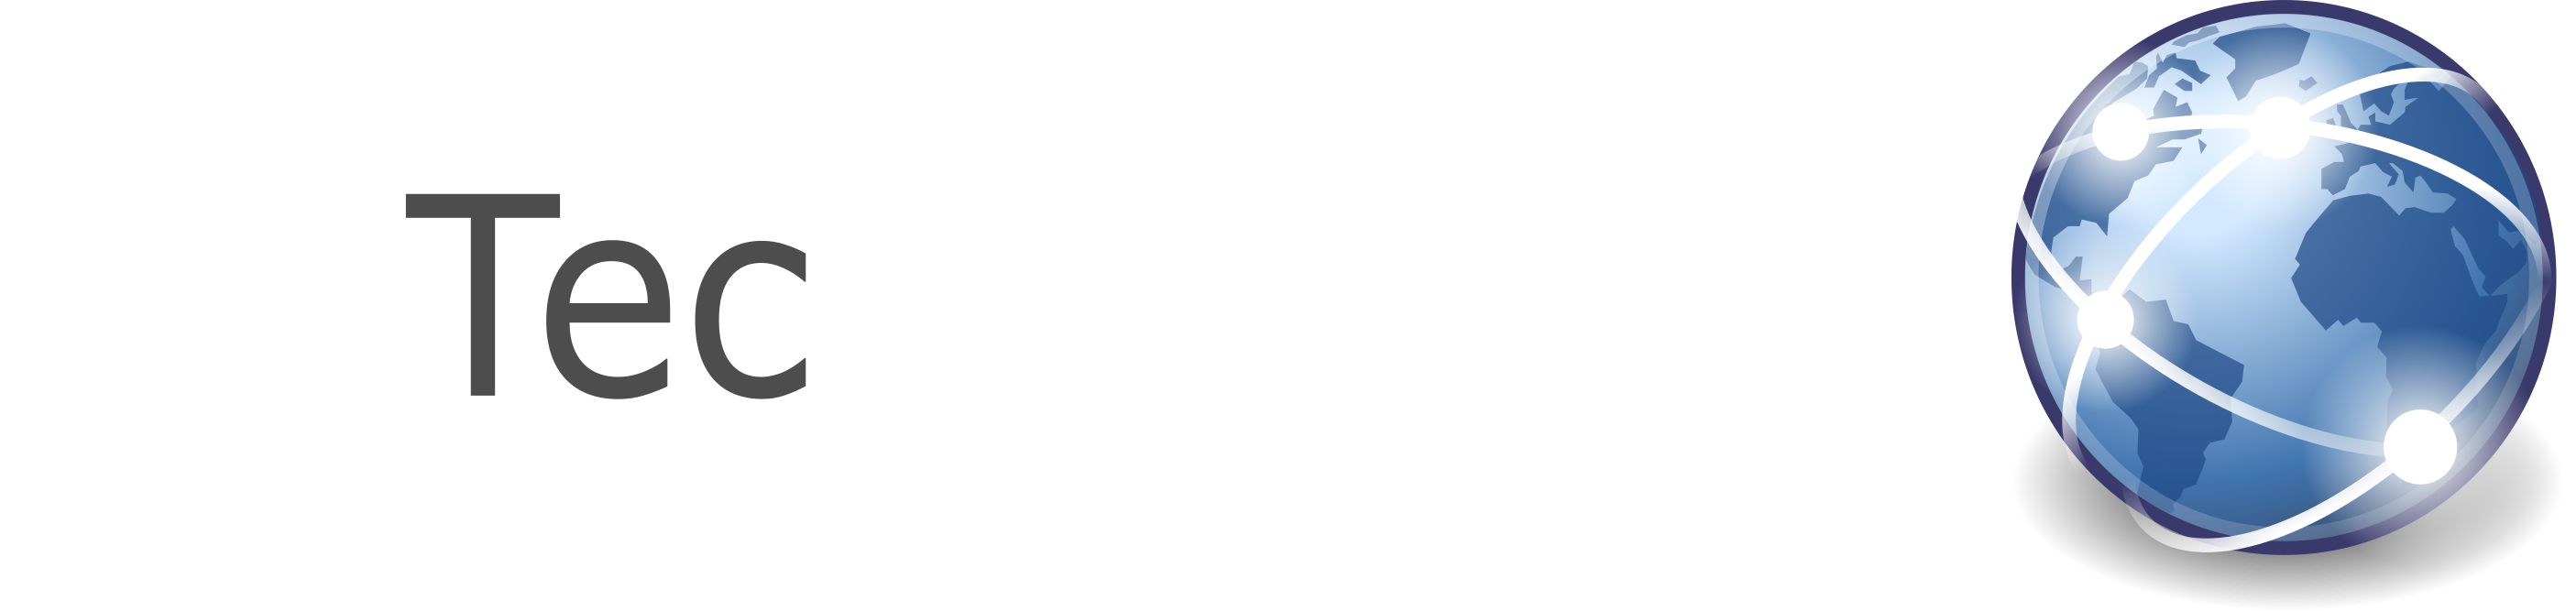 Brotec-Solutions